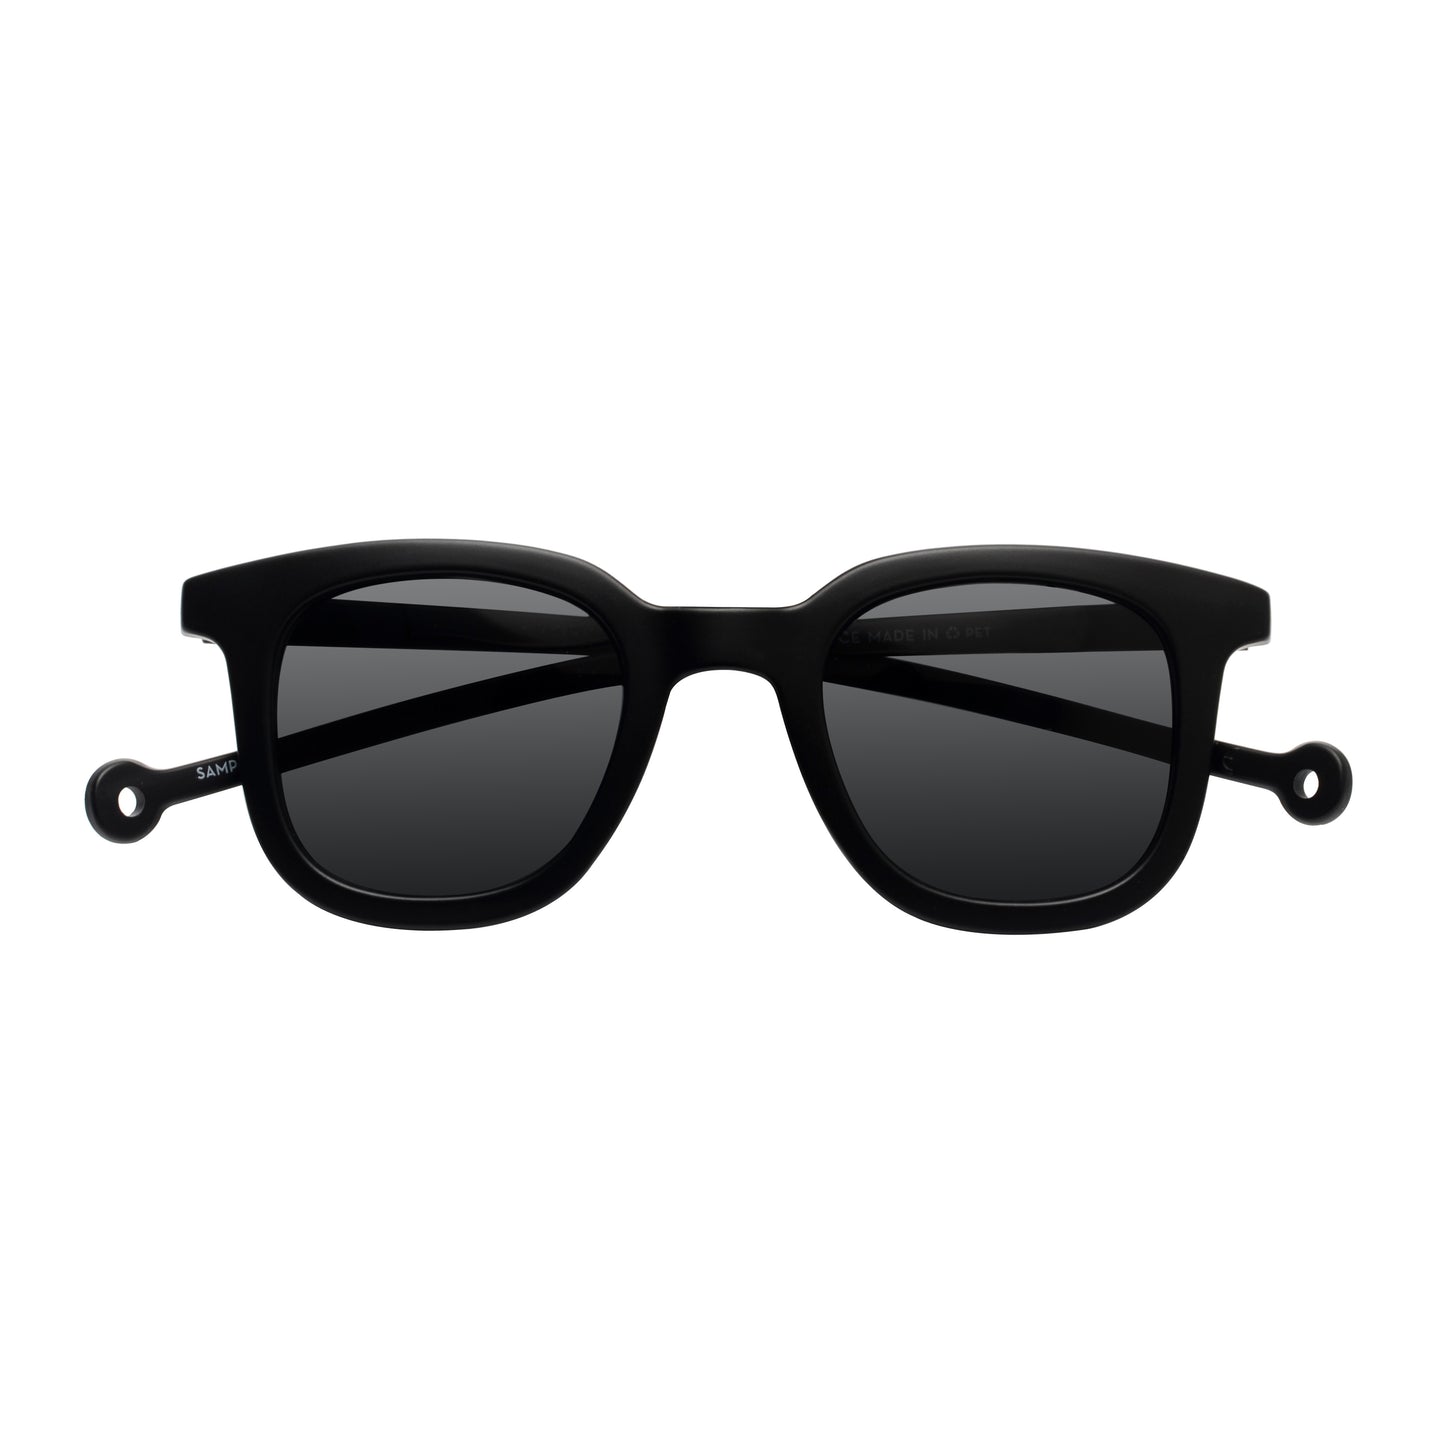 CAUCE Sunglasses - Black Matt